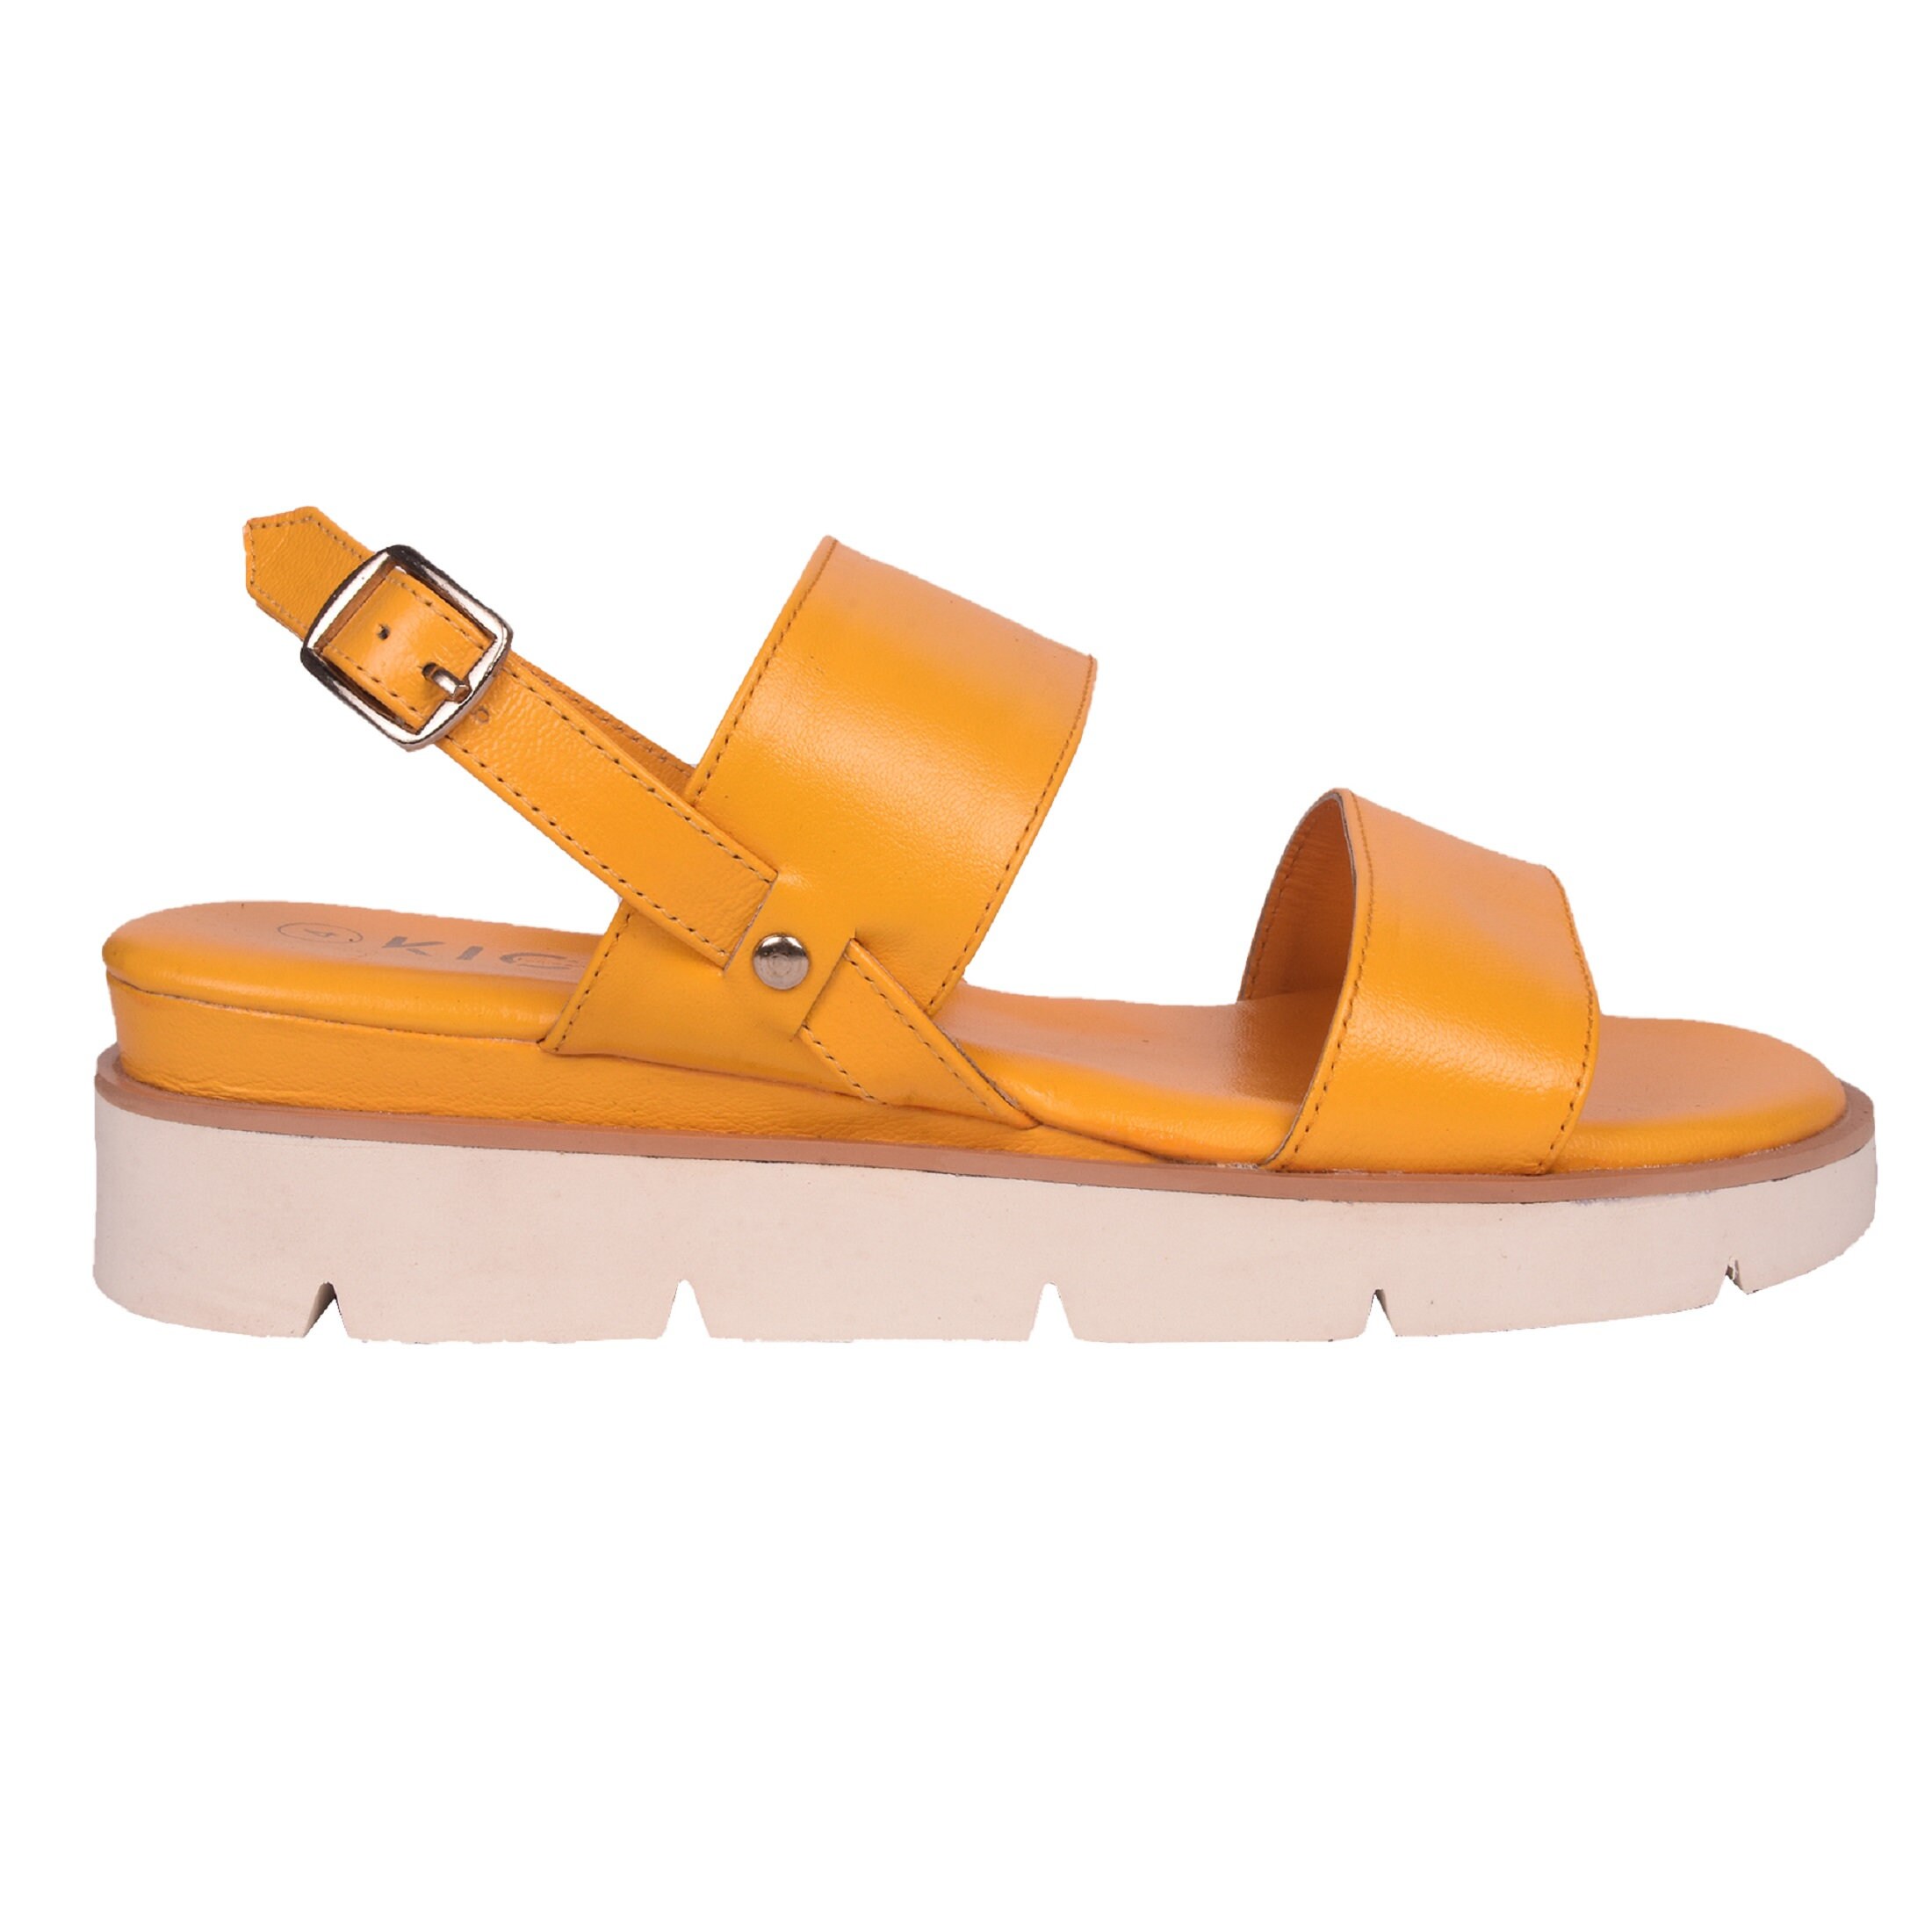 Ladies Genuine Leather Summer Sandals Slider Slipper Holiday | Etsy